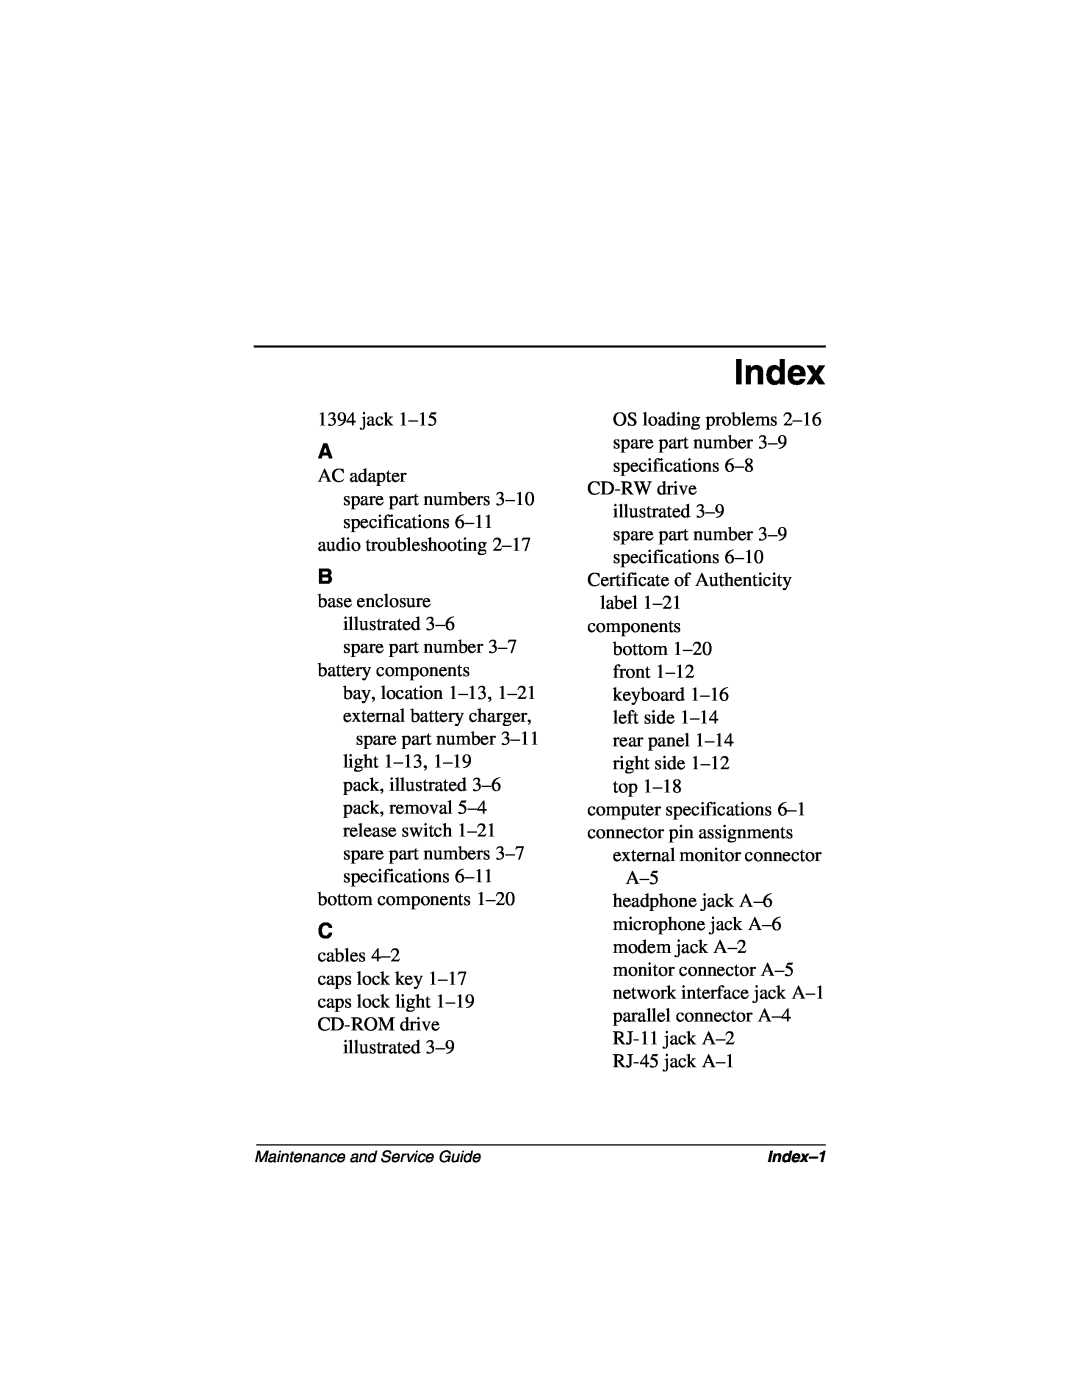 Compaq N160 manual Index 